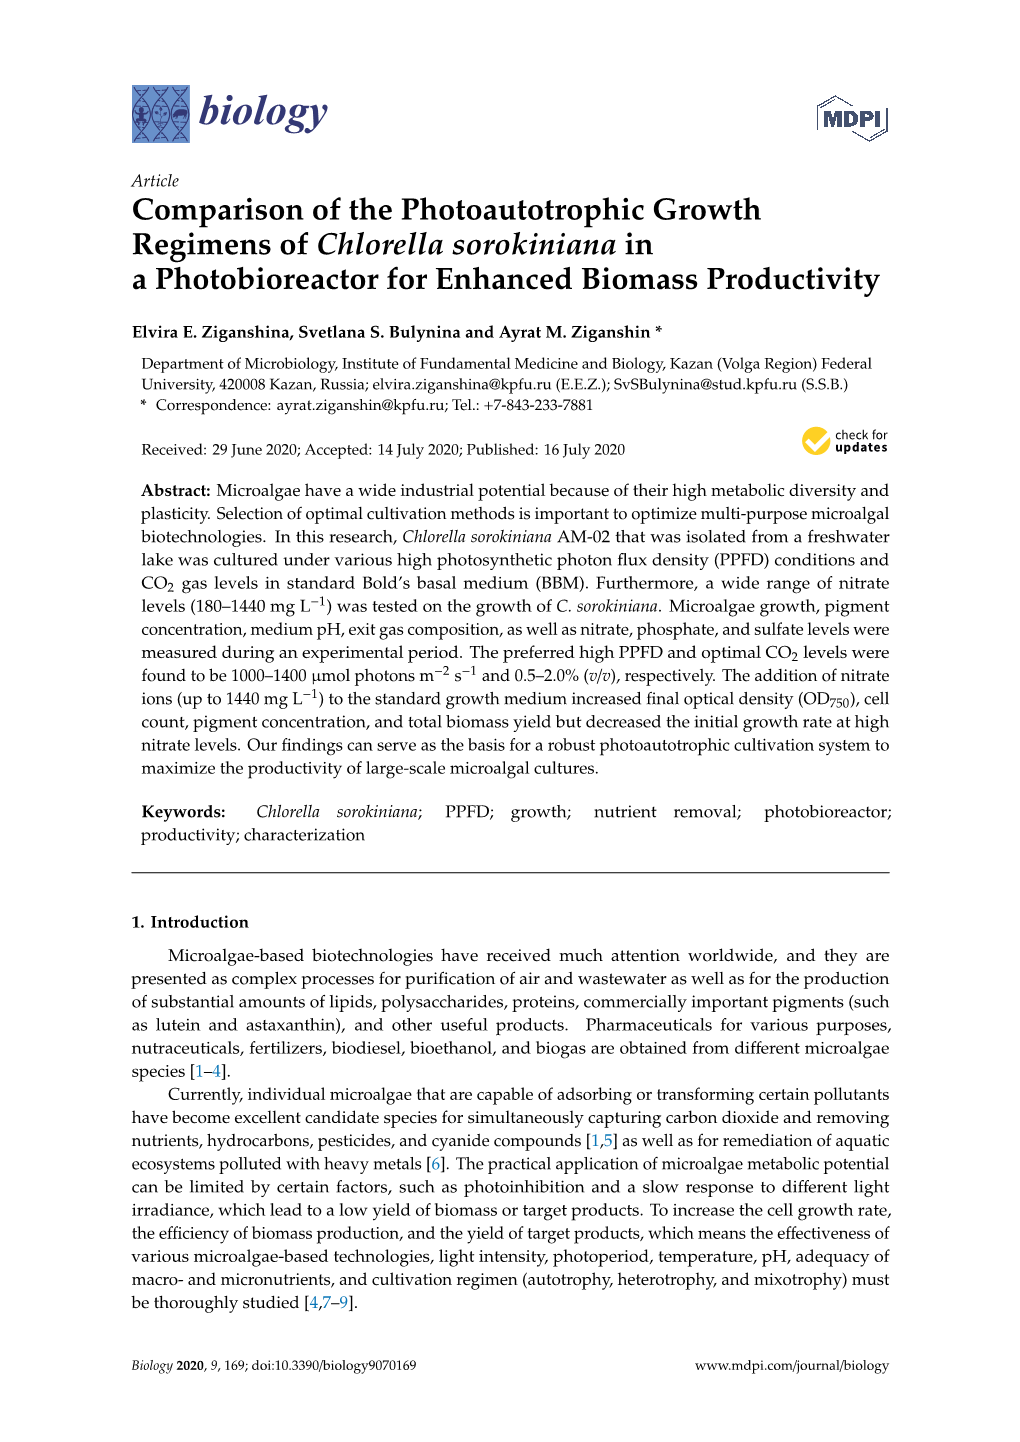 Comparison of the Photoautotrophic Growth Regimens of Chlorella Sorokiniana in a Photobioreactor for Enhanced Biomass Productivity